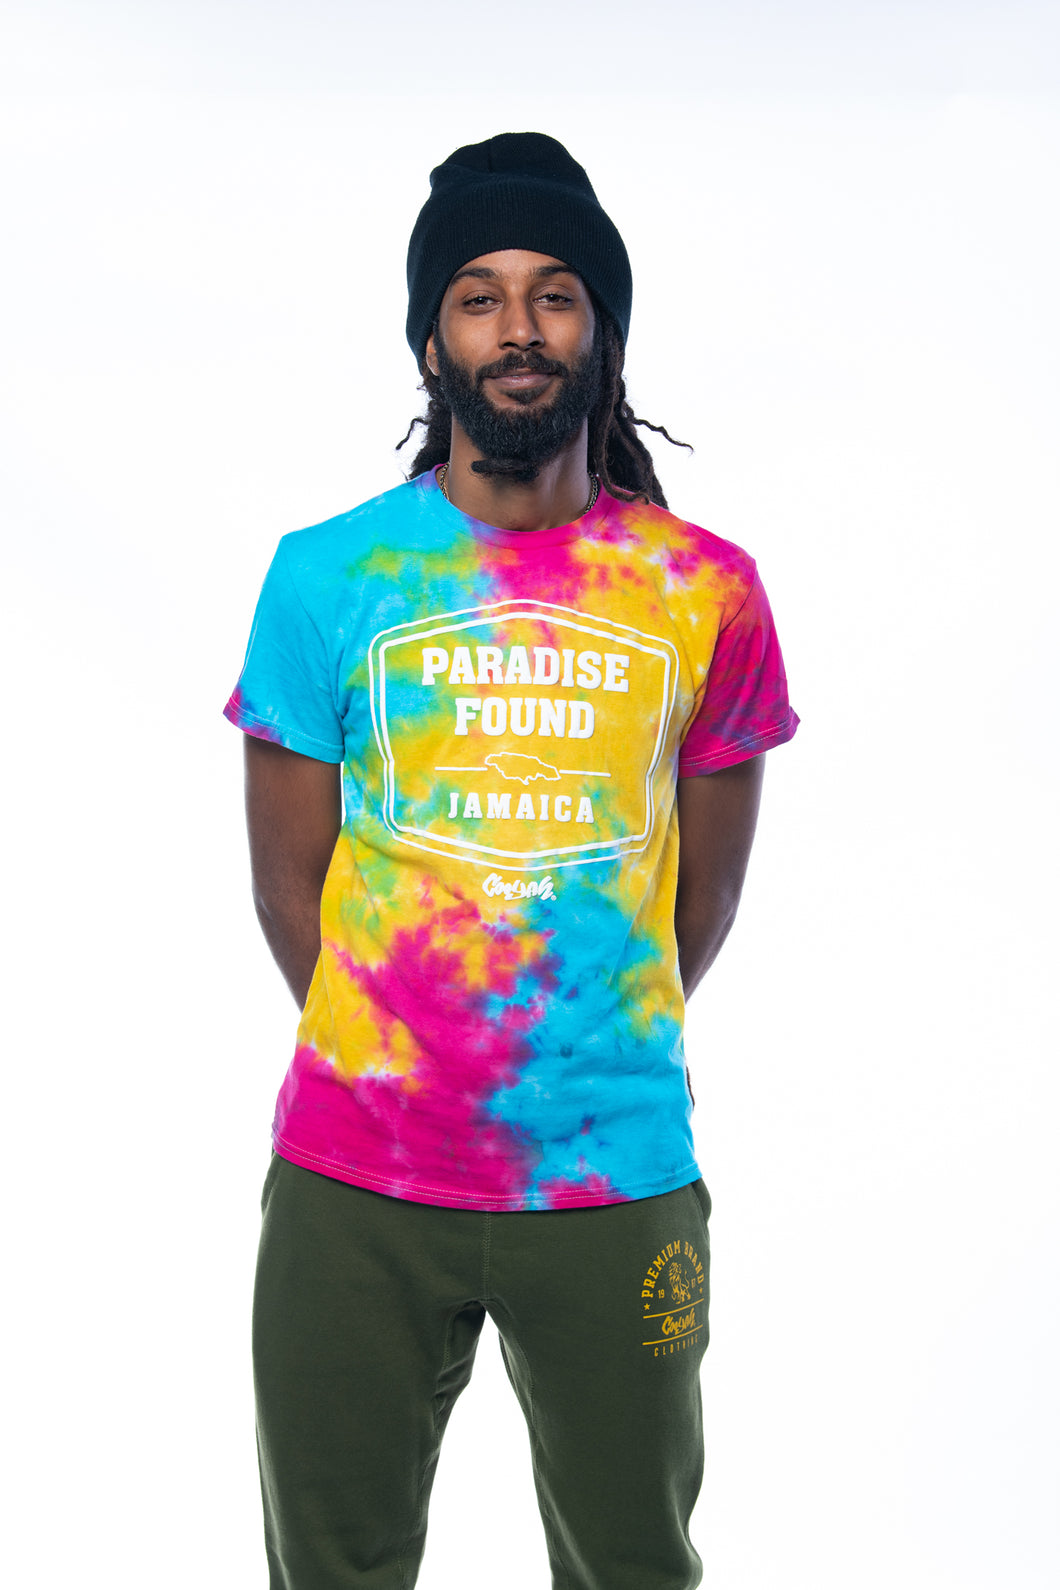 Cooyah Clothing. Men's tie-Dye graphic tee with Paradise Found Jamaica Design. Ringspun cotton, short sleeve, crew neck. Jamaican reggae brand.